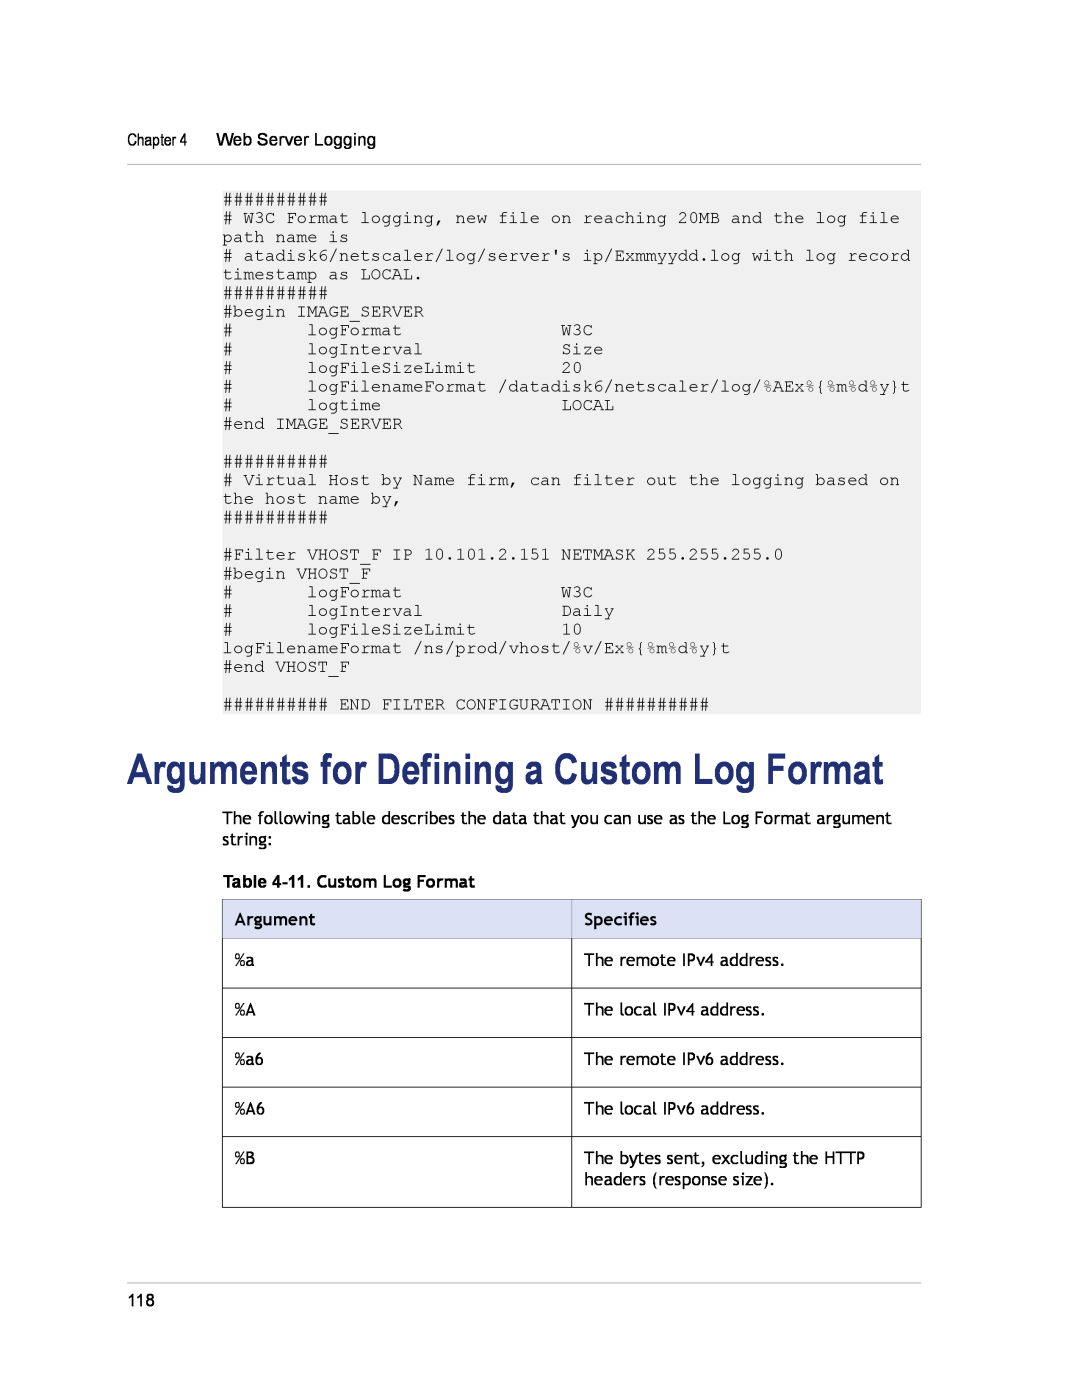 Citrix Systems CITRIX NETSCALER 9.3 manual Arguments for Defining a Custom Log Format, 11. Custom Log Format, Specifies 